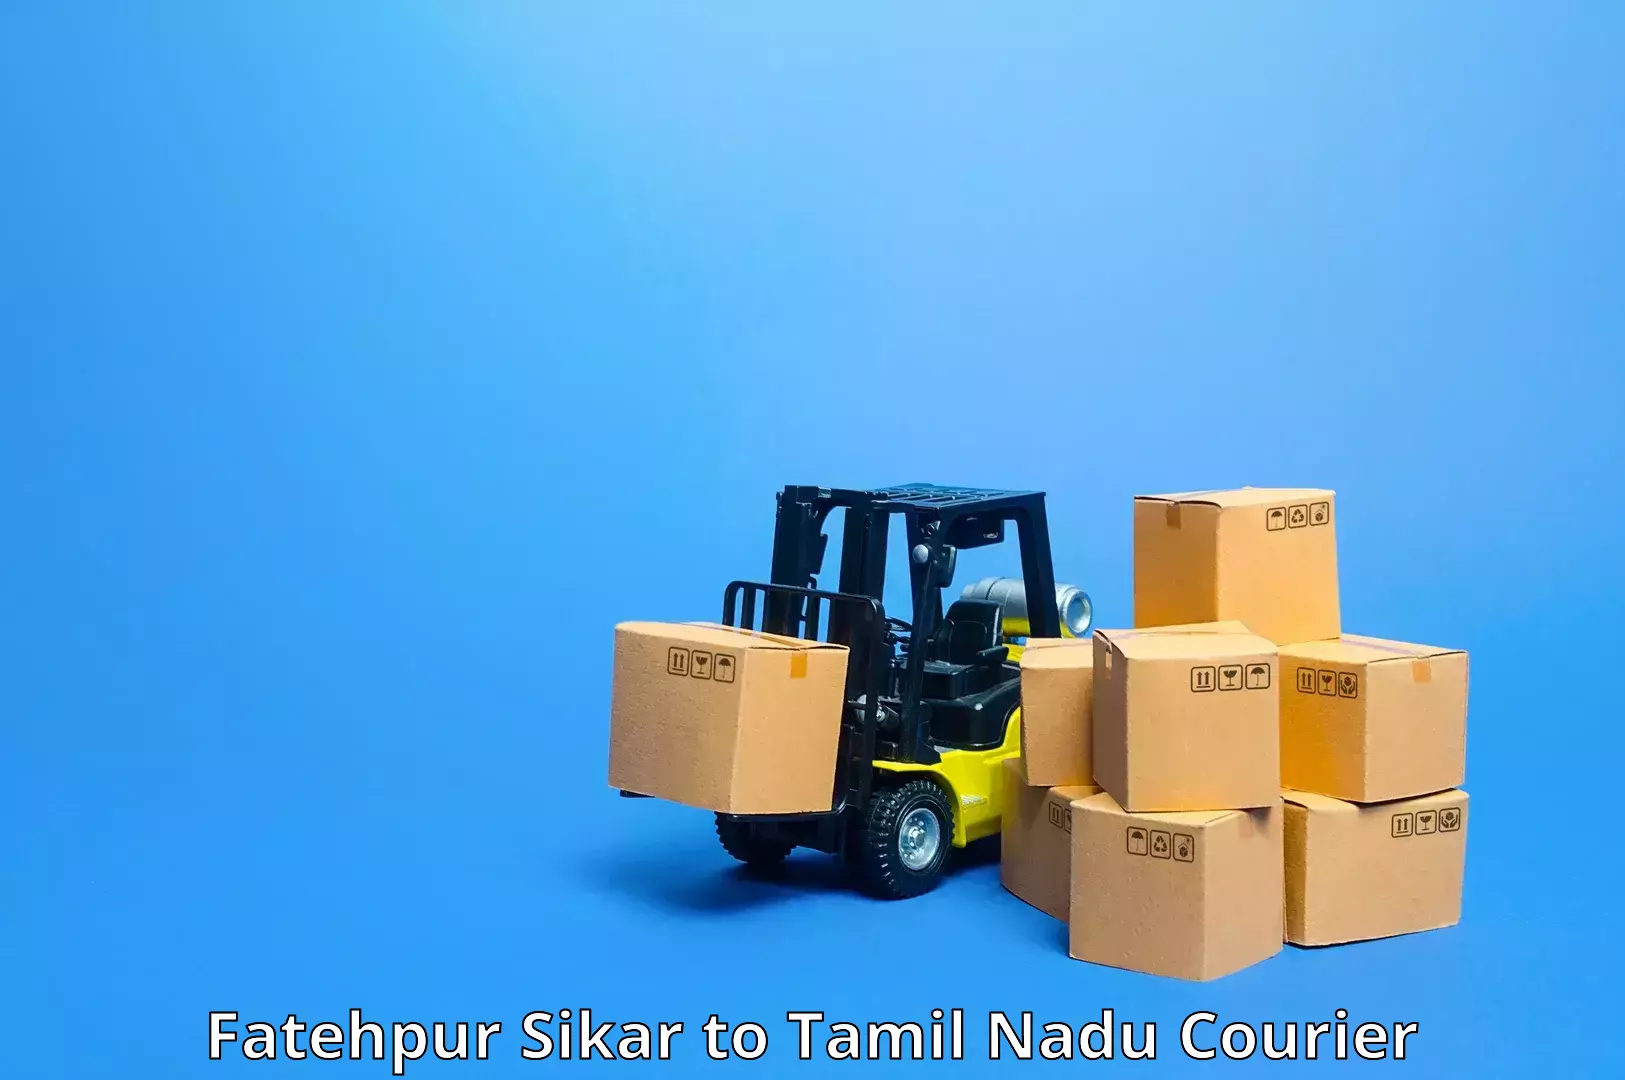 Budget-friendly shipping Fatehpur Sikar to Trichy